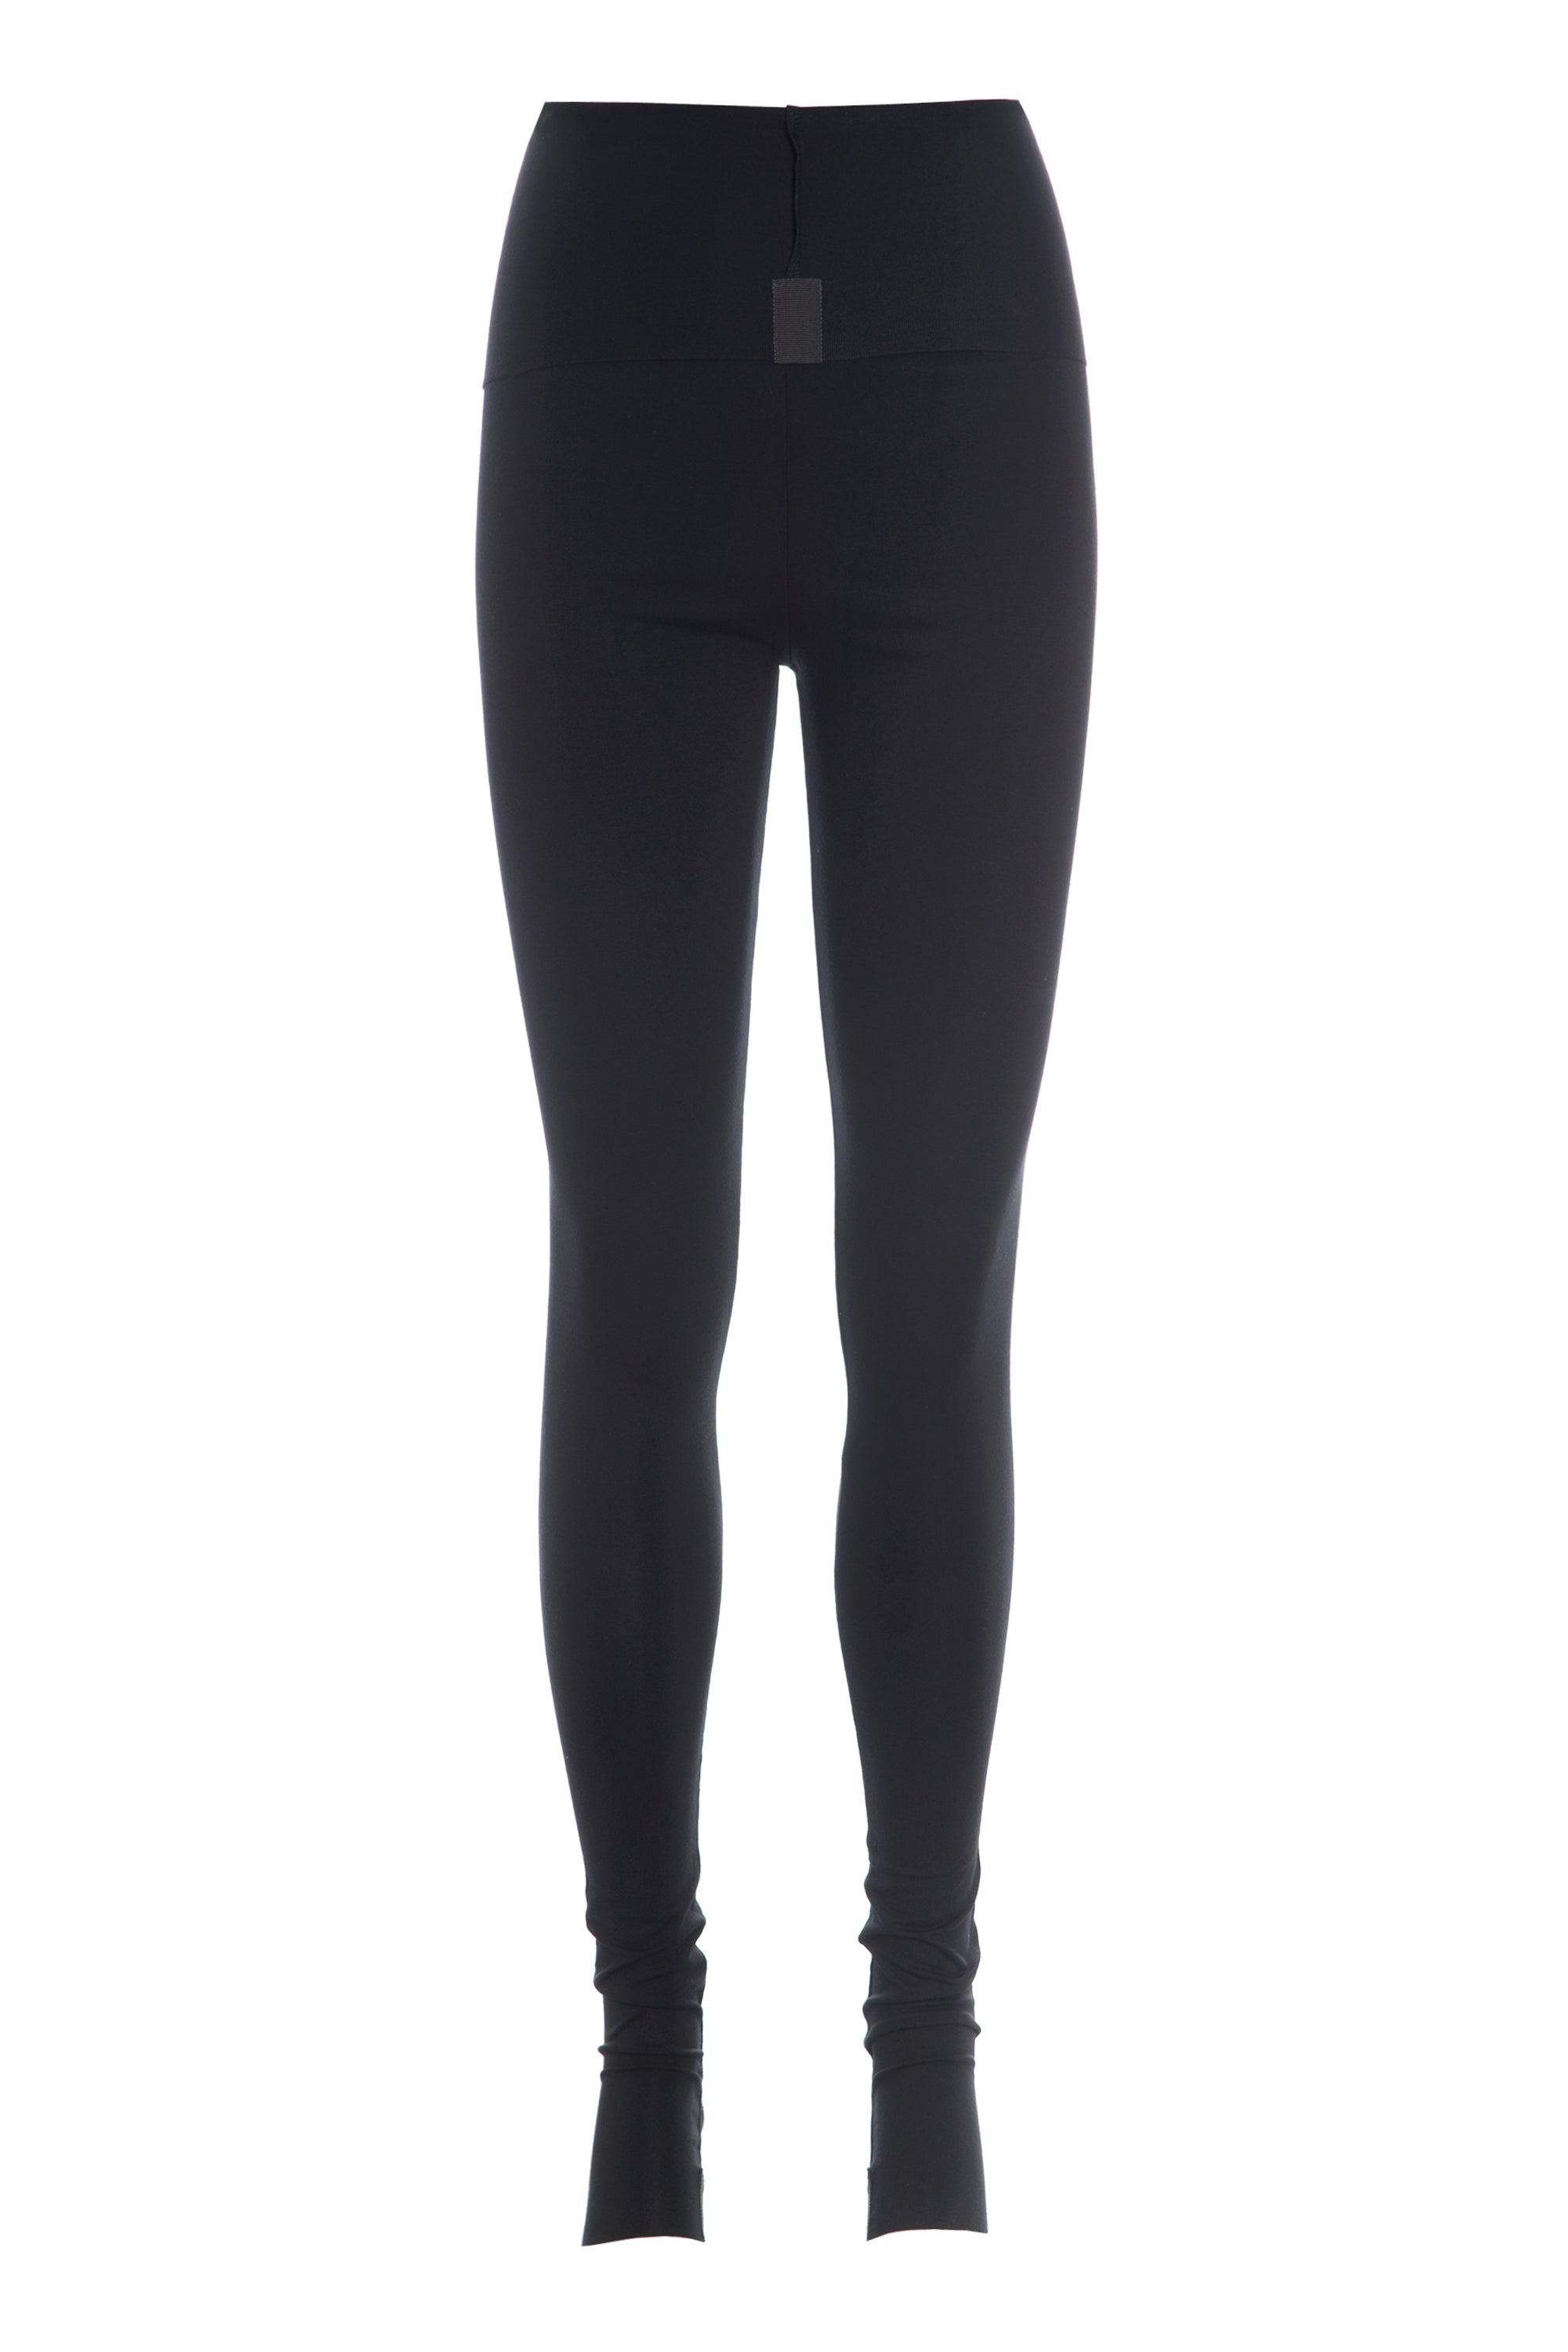 YUHAOTIN Cotton Pants for Women UK Black Yoga Pants Leggings for